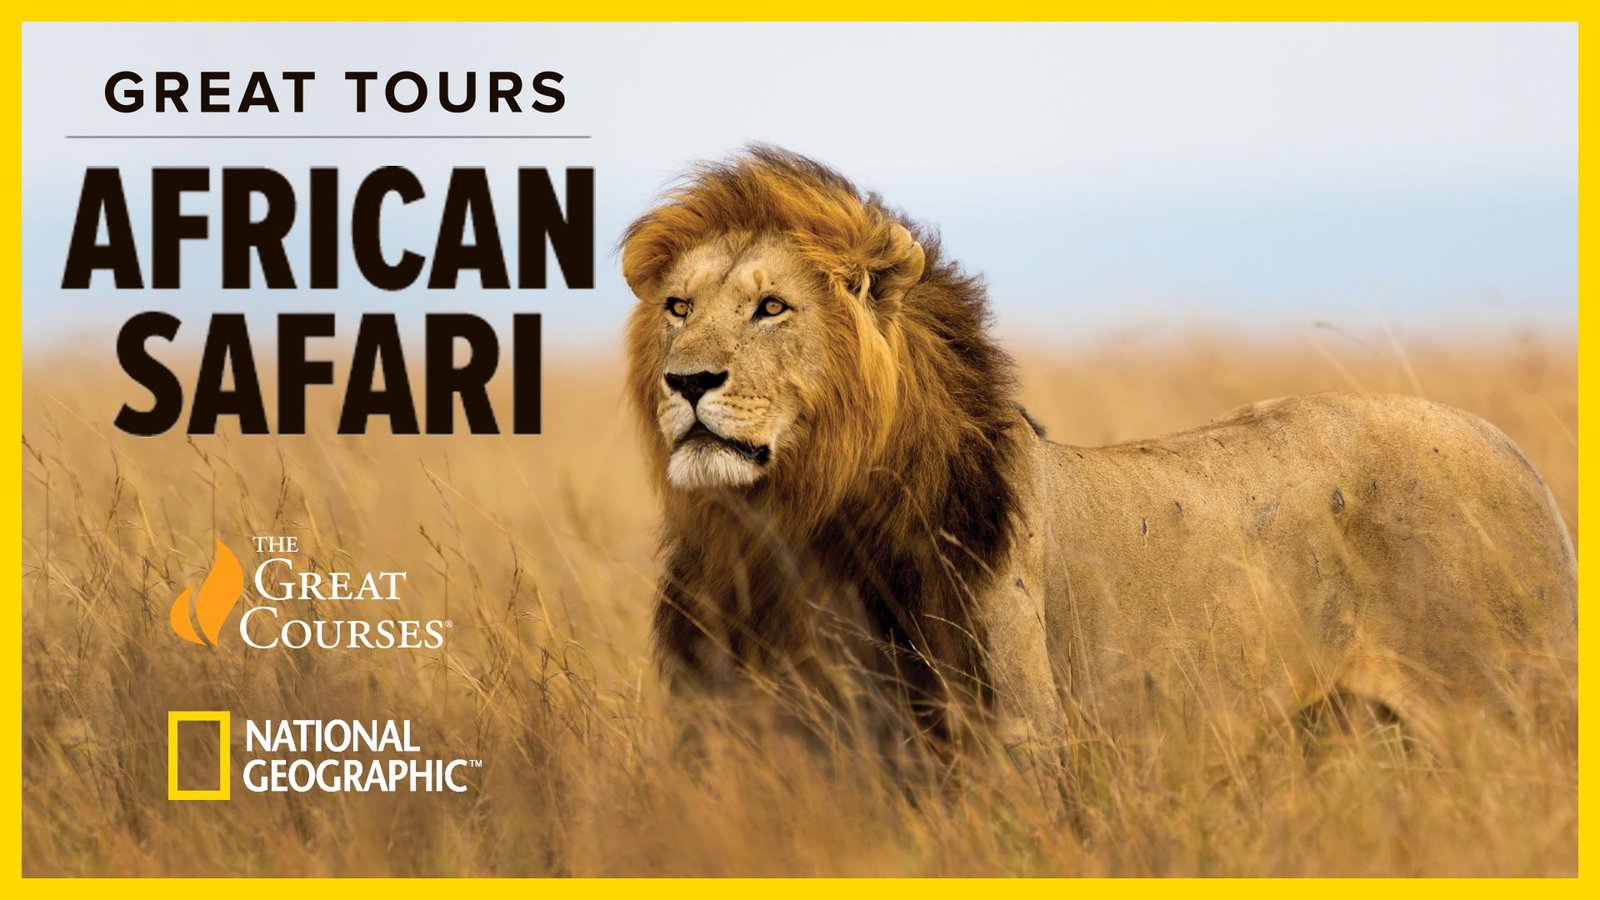 The Great Tours: African Safari